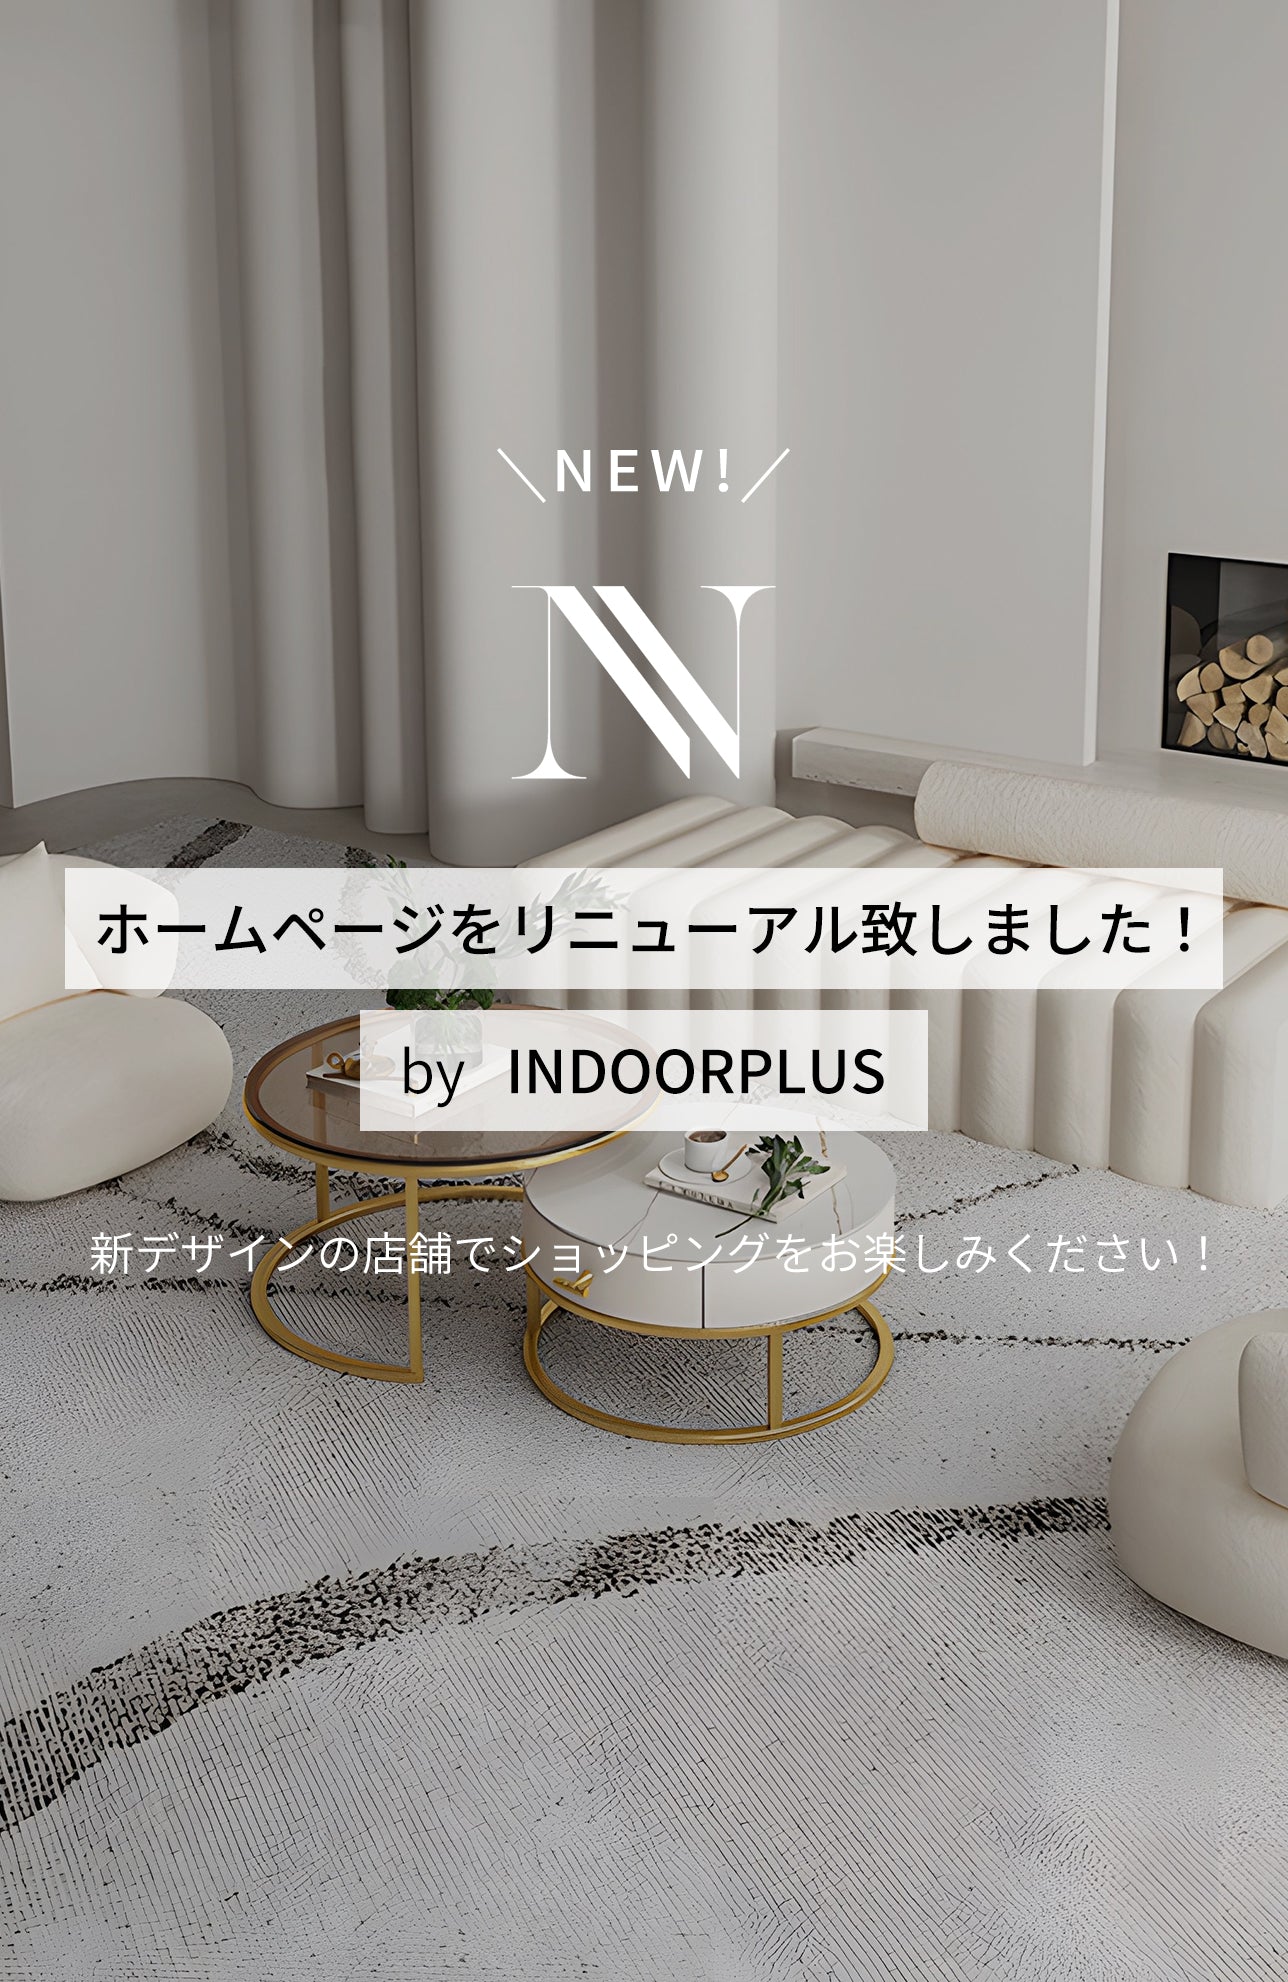 INDOORPLUS公式/家具・インテリア オンライン通販 – Indoorplus